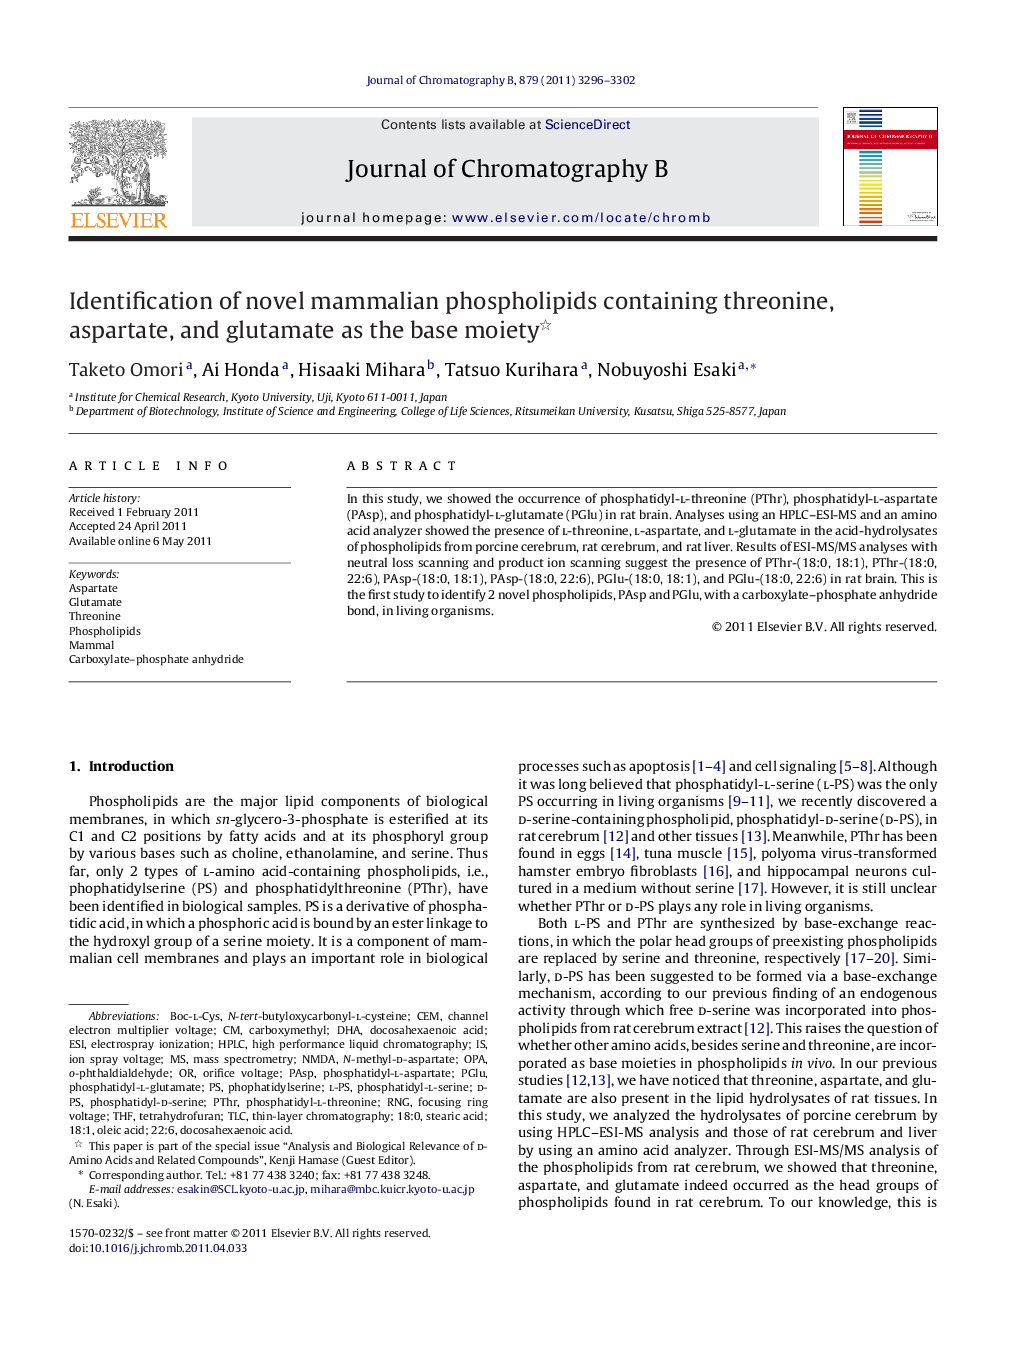 Identification of novel mammalian phospholipids containing threonine, aspartate, and glutamate as the base moiety